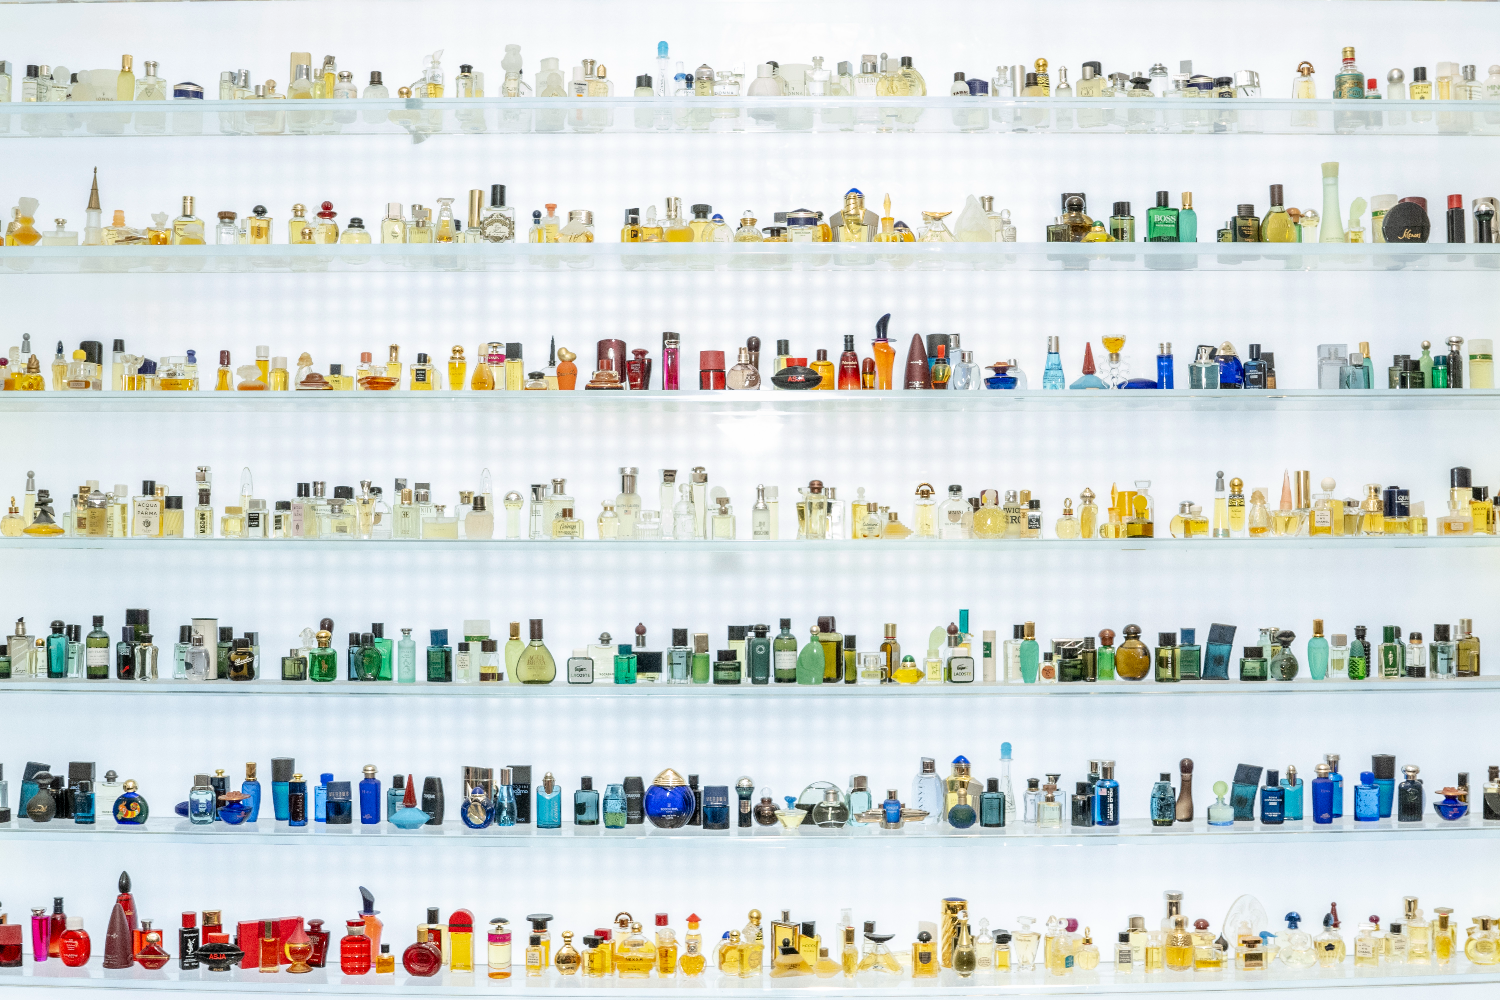 color coordinated fragrances sitting on glass shelves